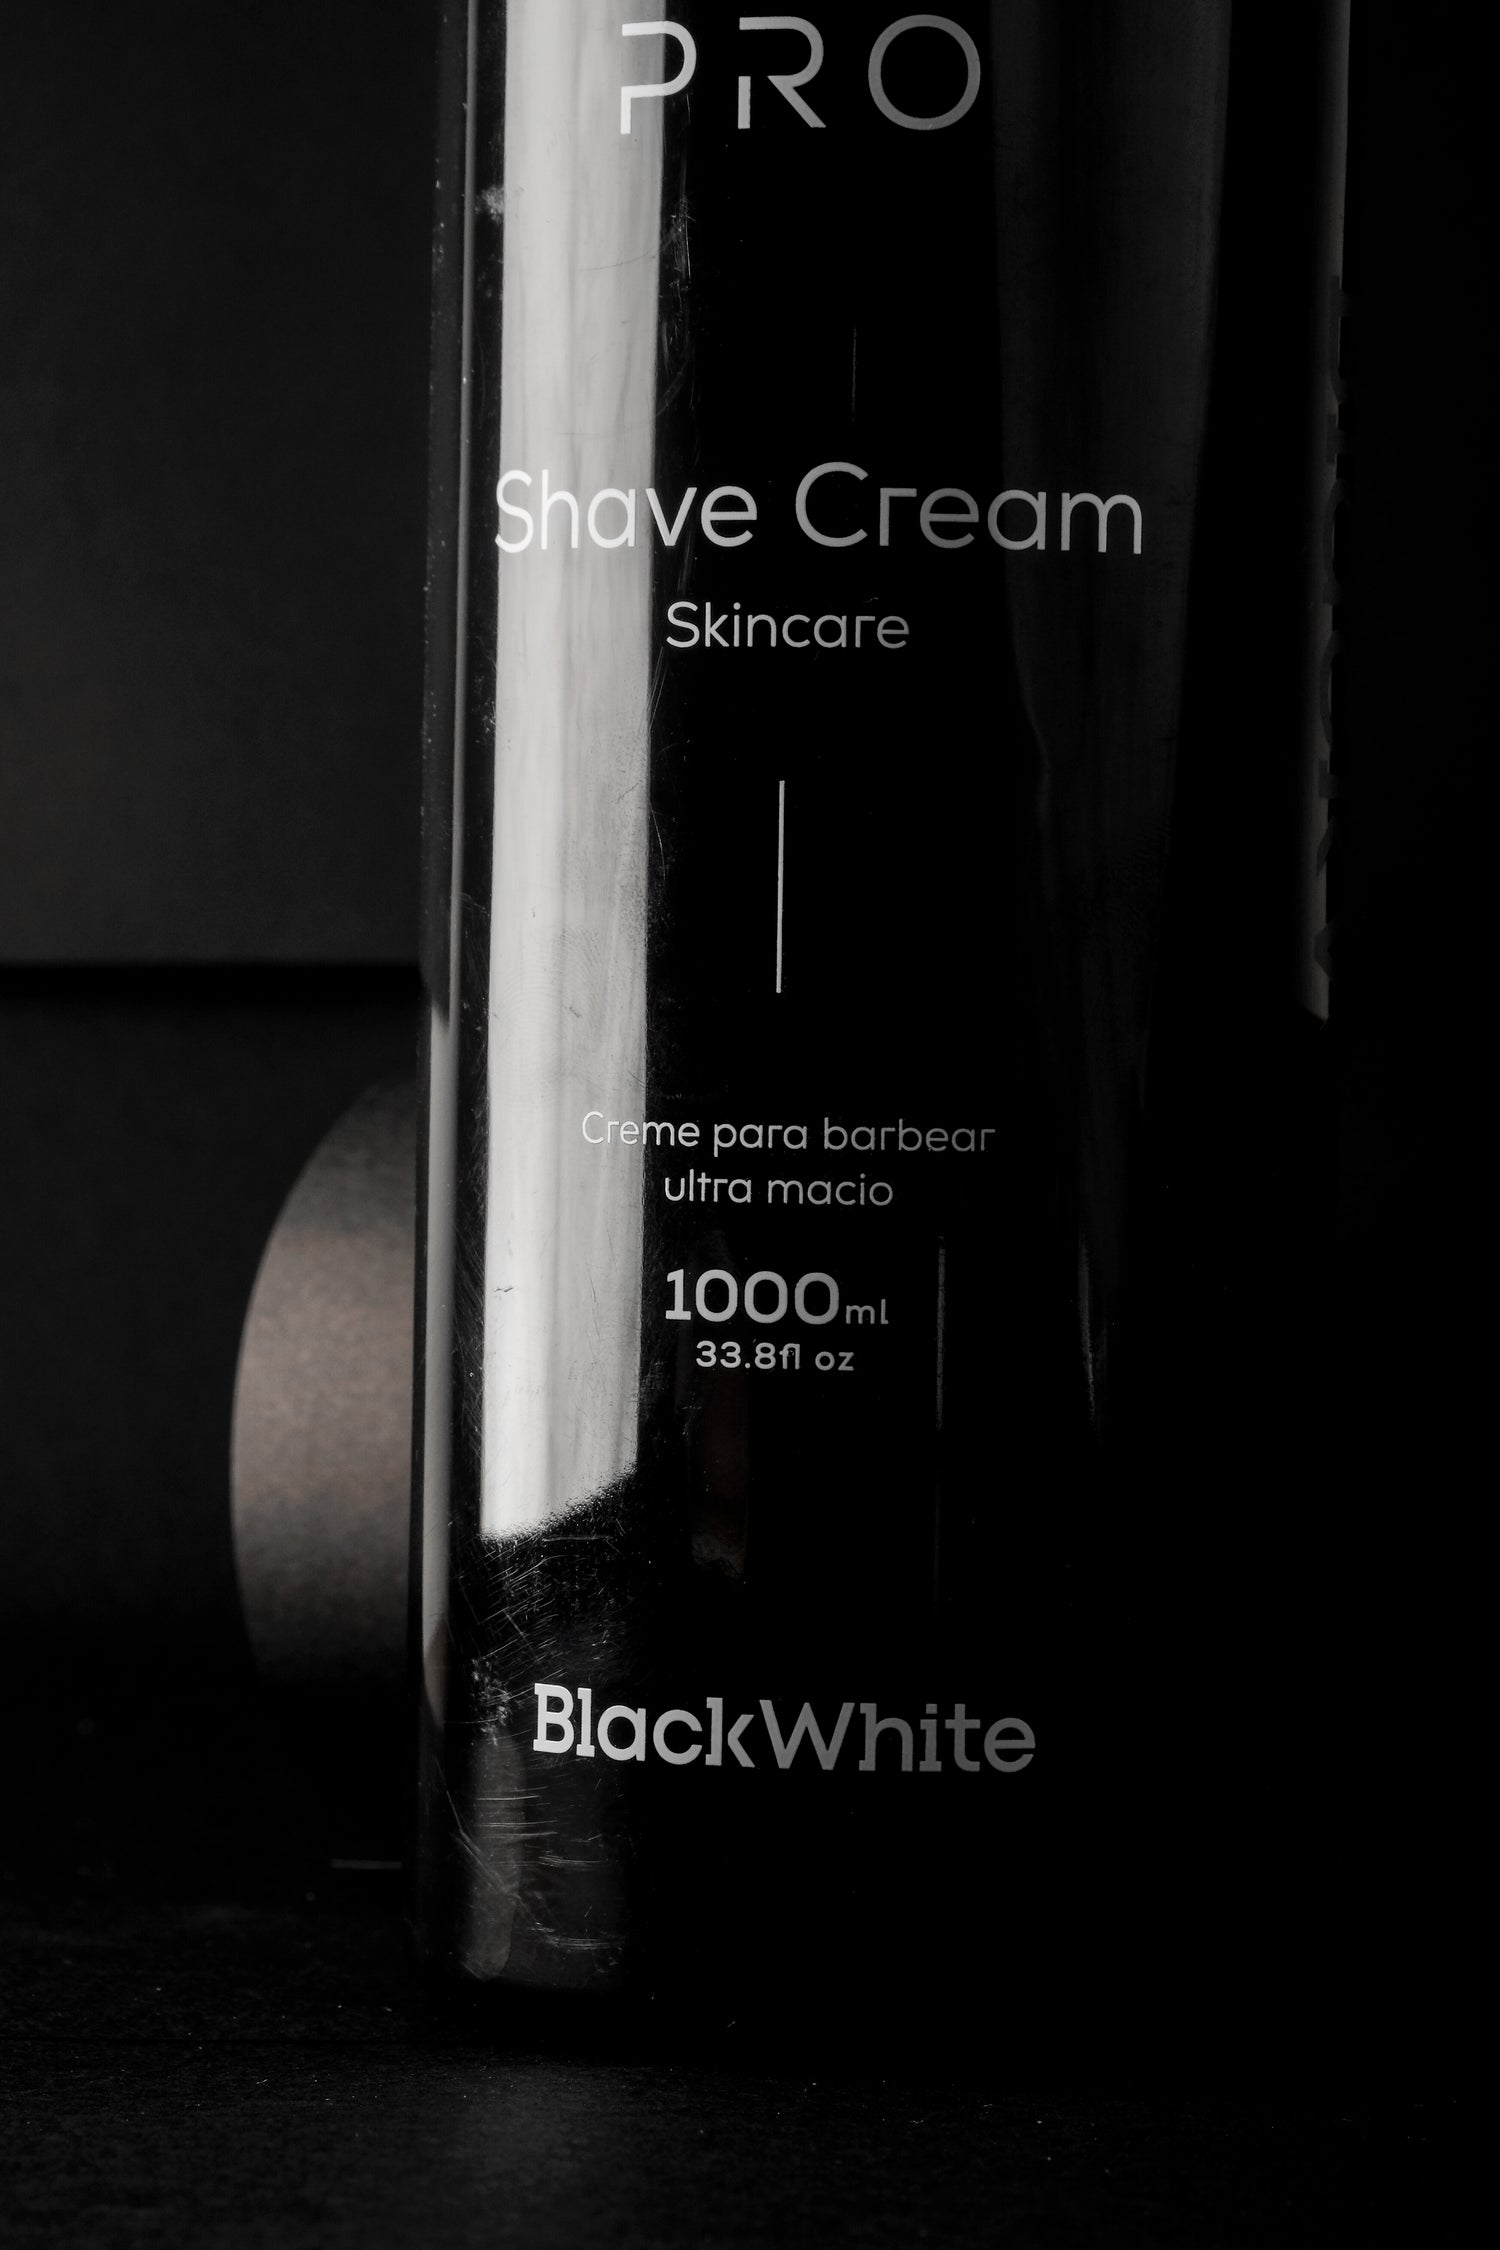 Shave Cream PRO